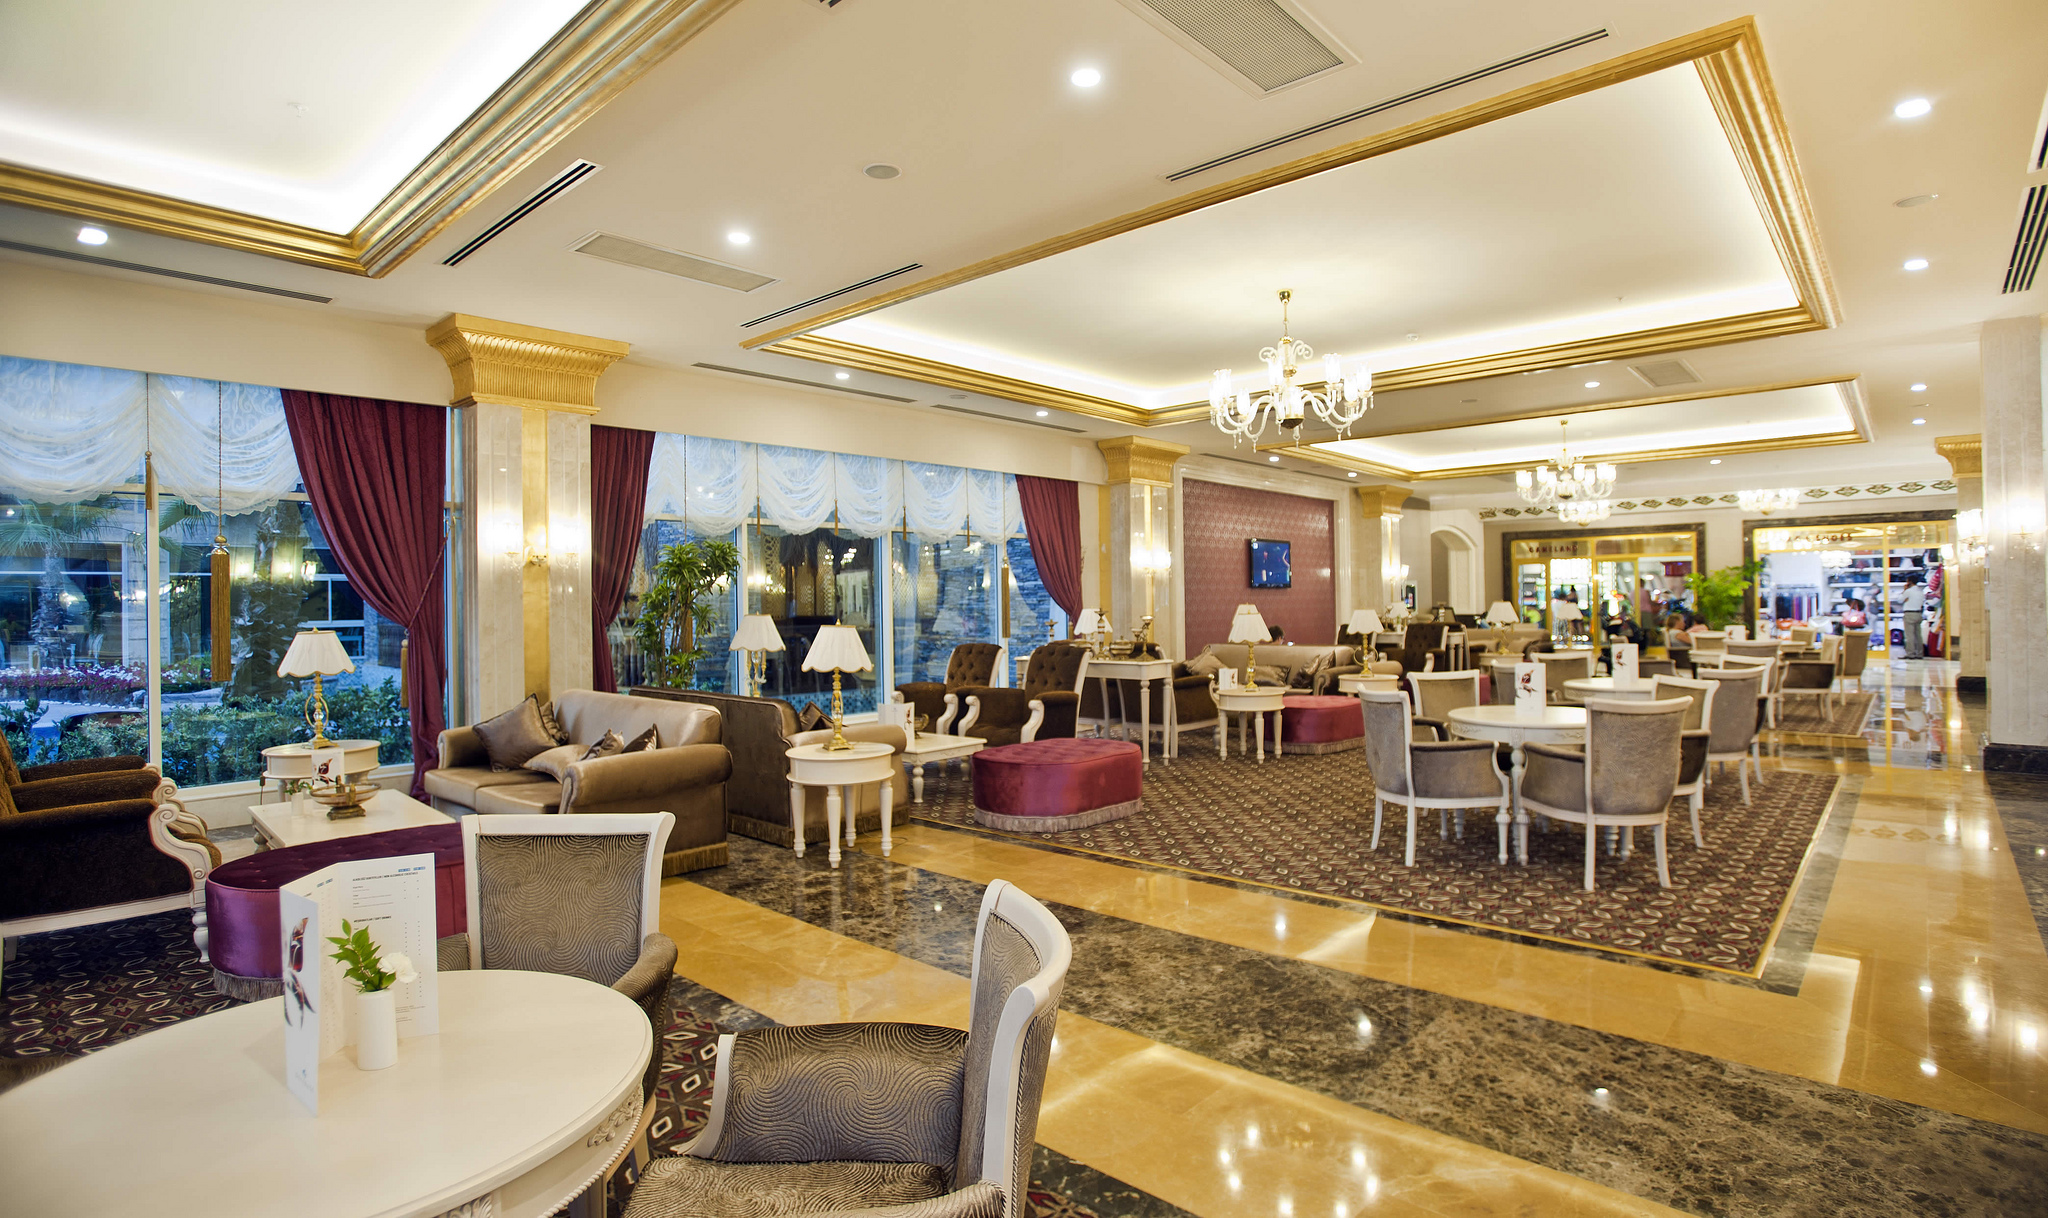 Crystal palace luxury resort spa 5 турция сиде